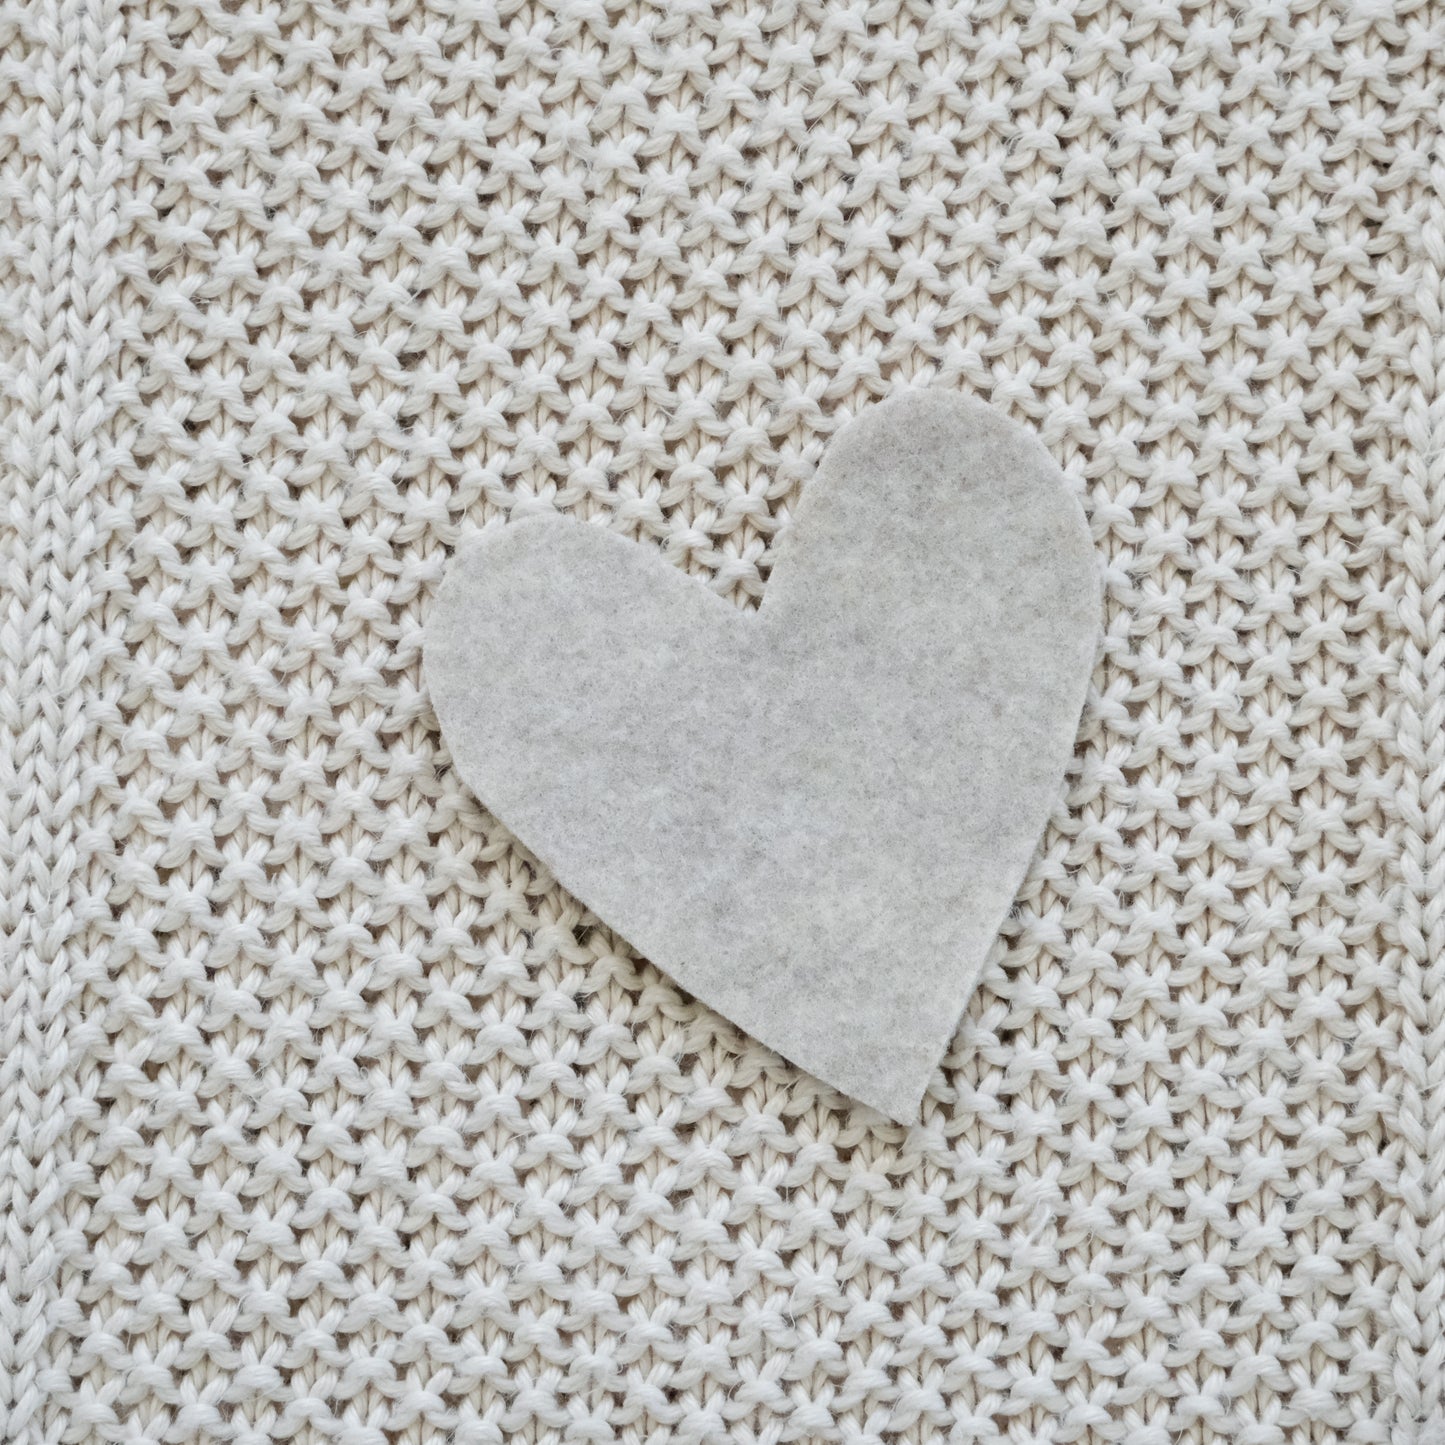 Sandstone Hearts - Love Letter 💌